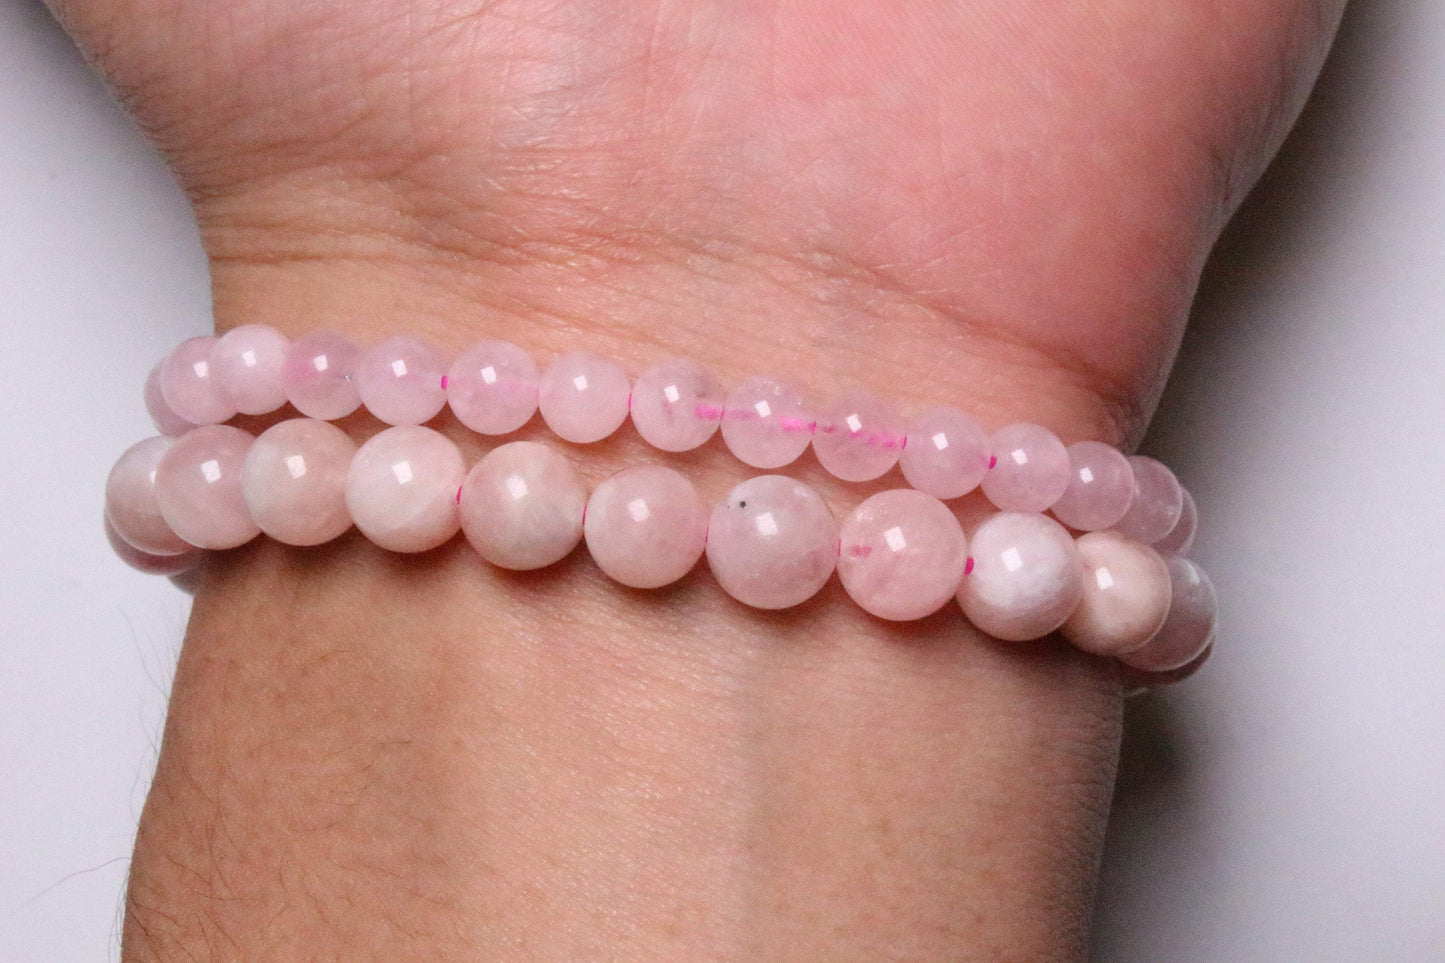 Béryl pink bracelet has